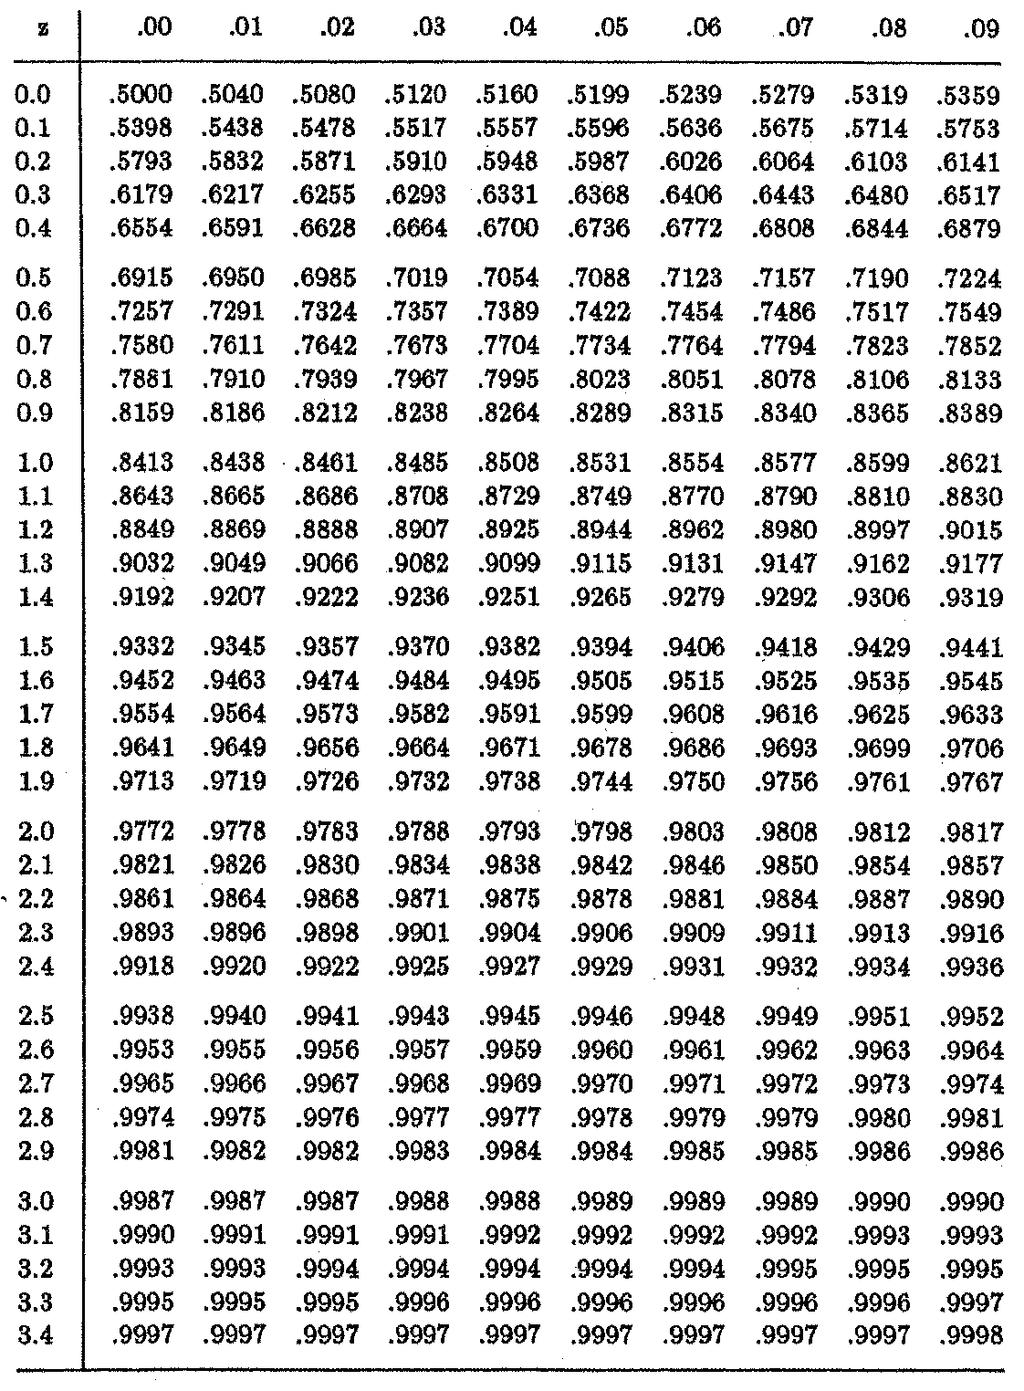 Probability Tables Stadard Normal z pp Z z z e dz for x, ℝ π Take from: Kokoska, S., ad C. Neviso.